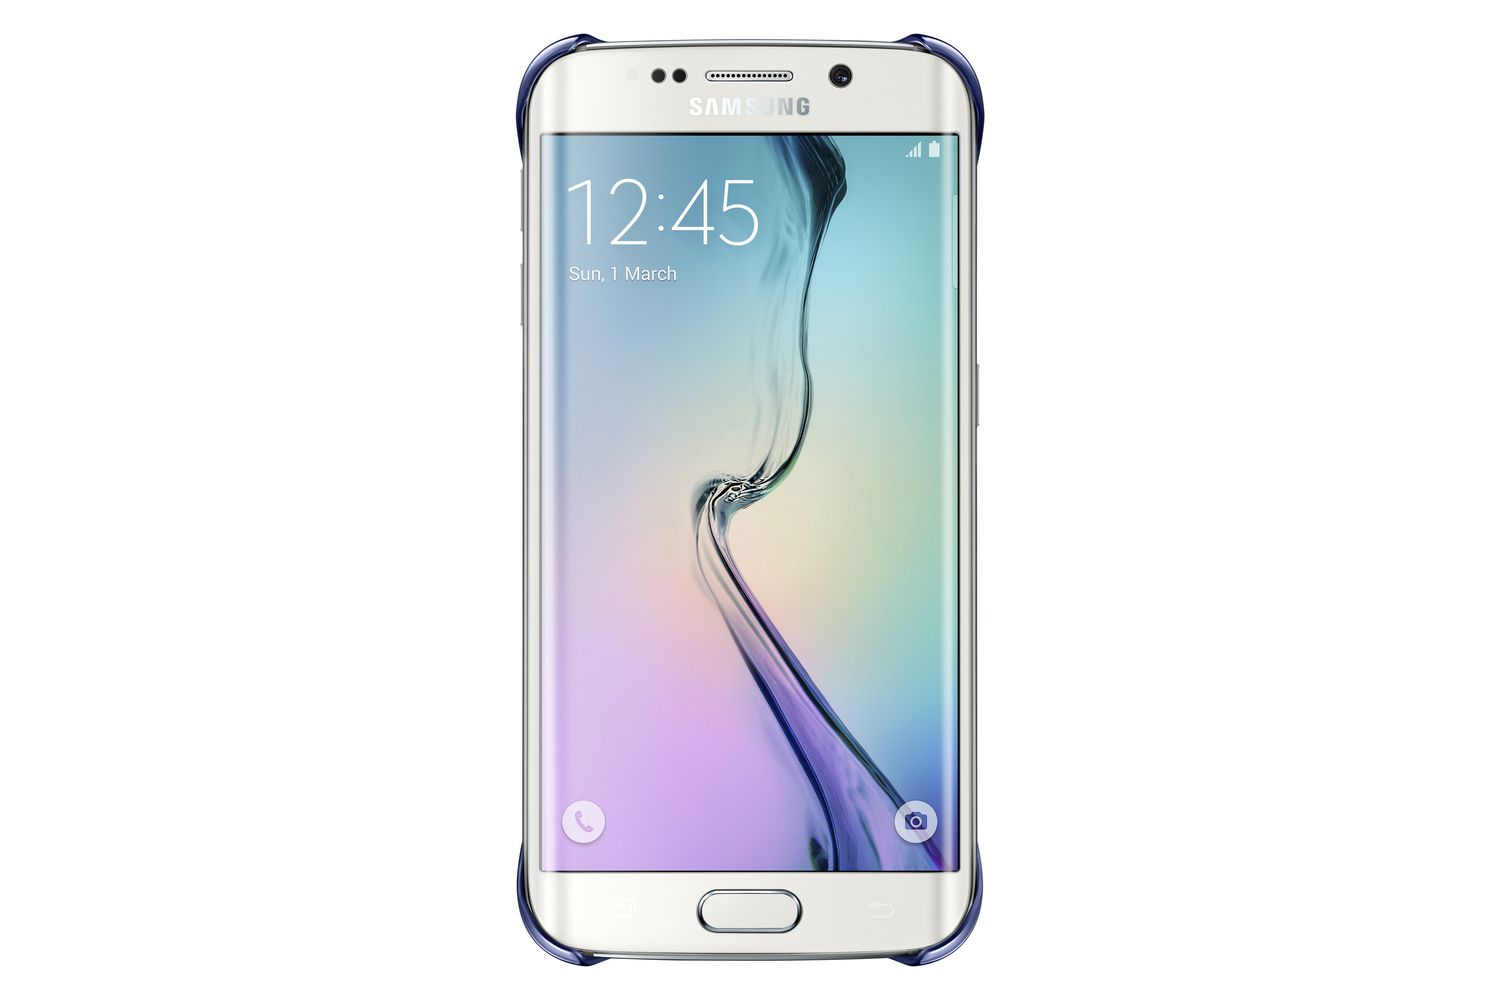 Samsung Coque transparente pour Galaxy S6 edge, argent